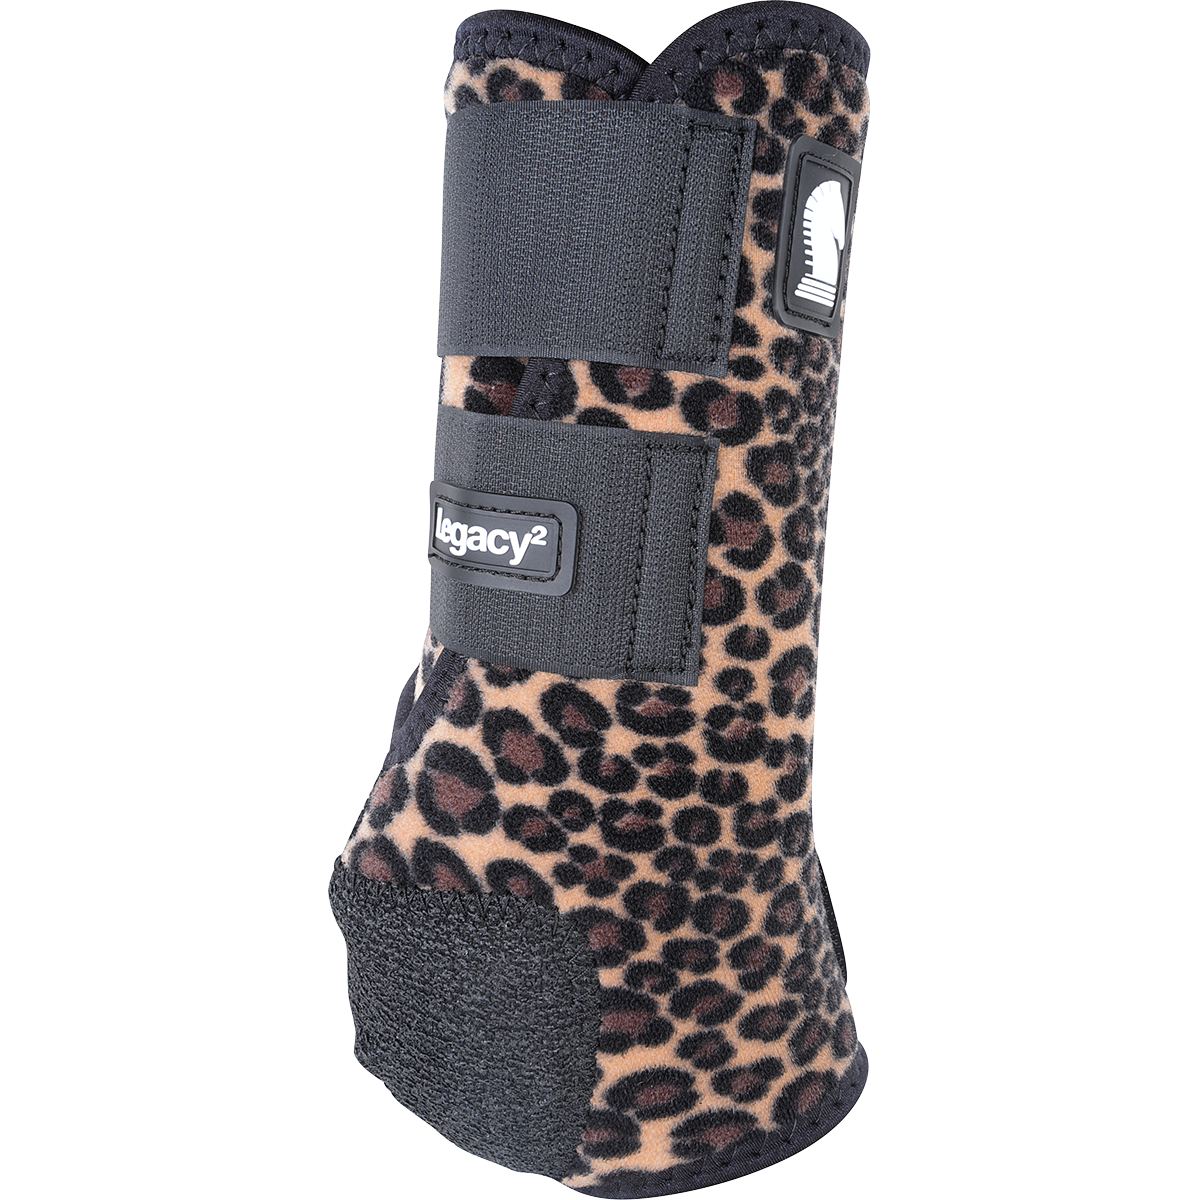 Legacy Boot- Cheetah